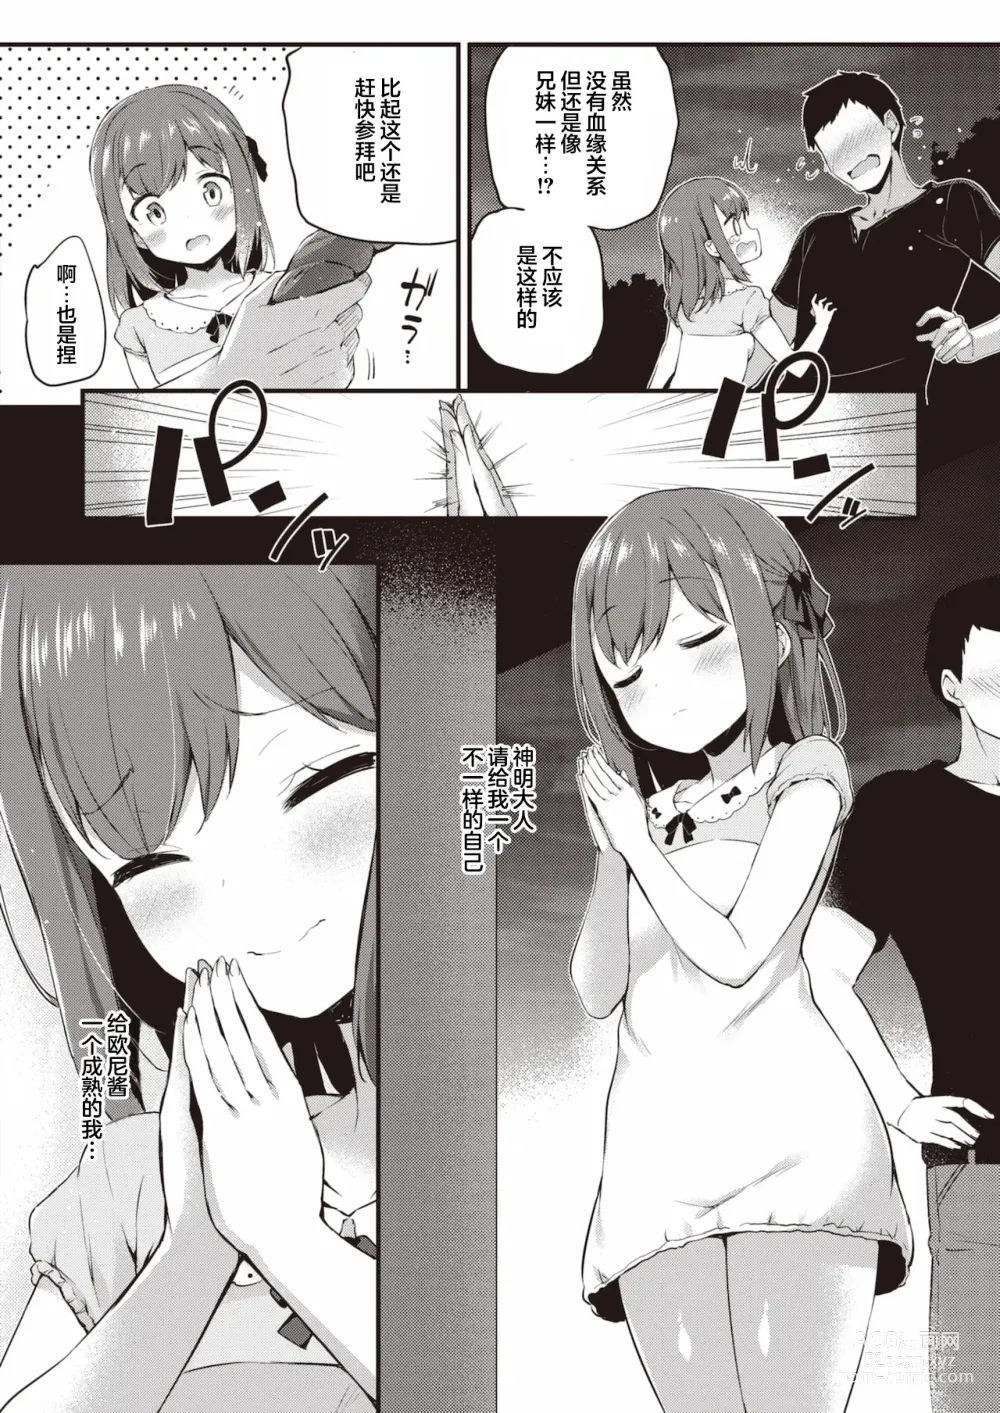 Page 4 of manga 崭新的我